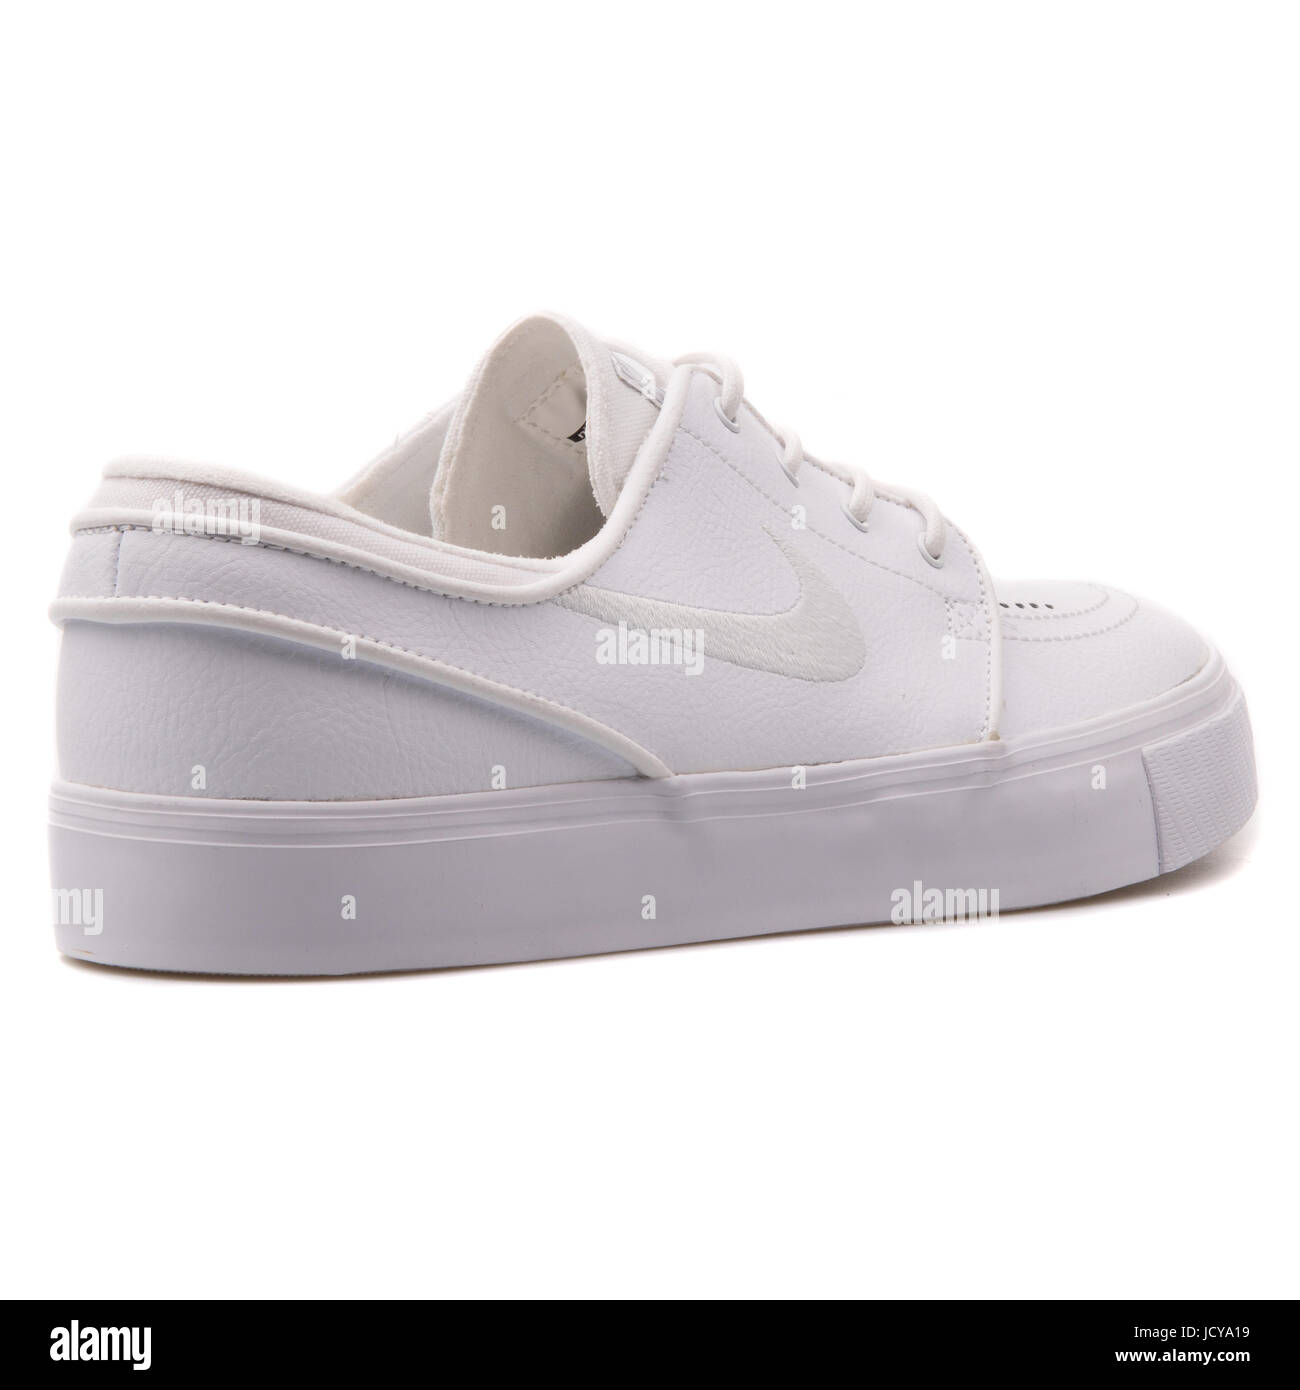 Nike Stefan Janoski L White Leather Men's Skateboarding Shoes - 616490-110 Stock Photo - Alamy